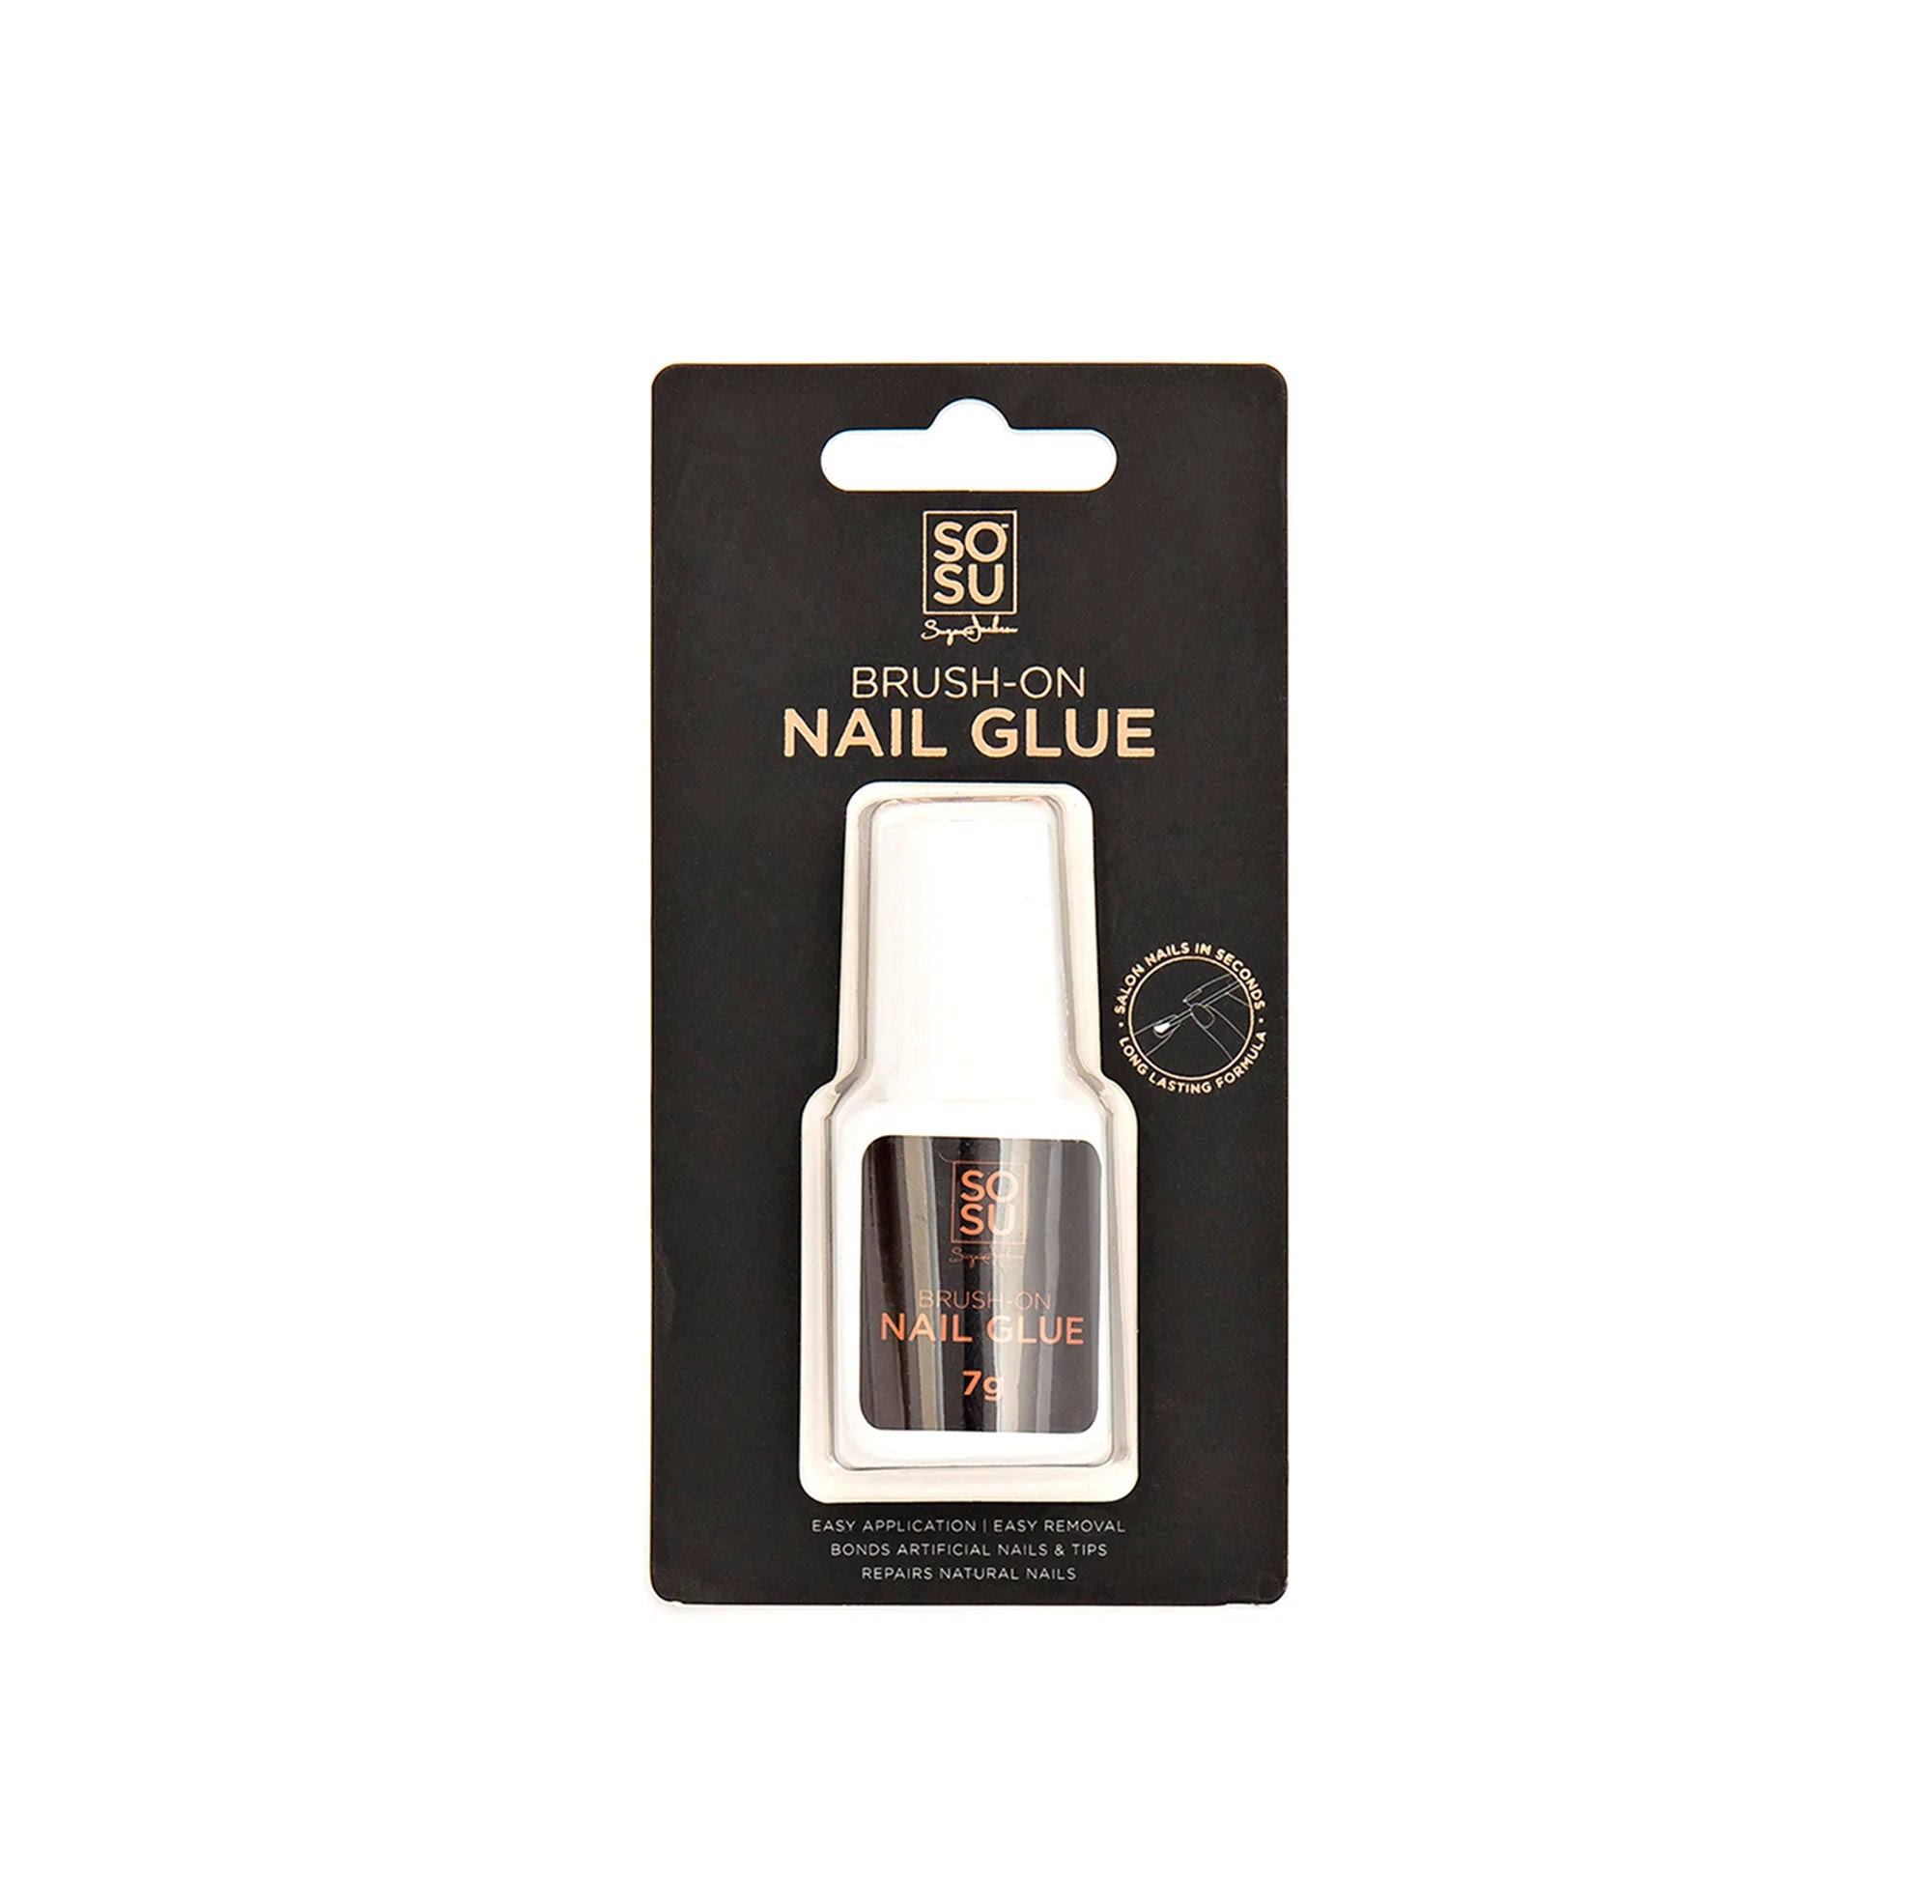 SOSU Cosmetics Nail Glue 7g